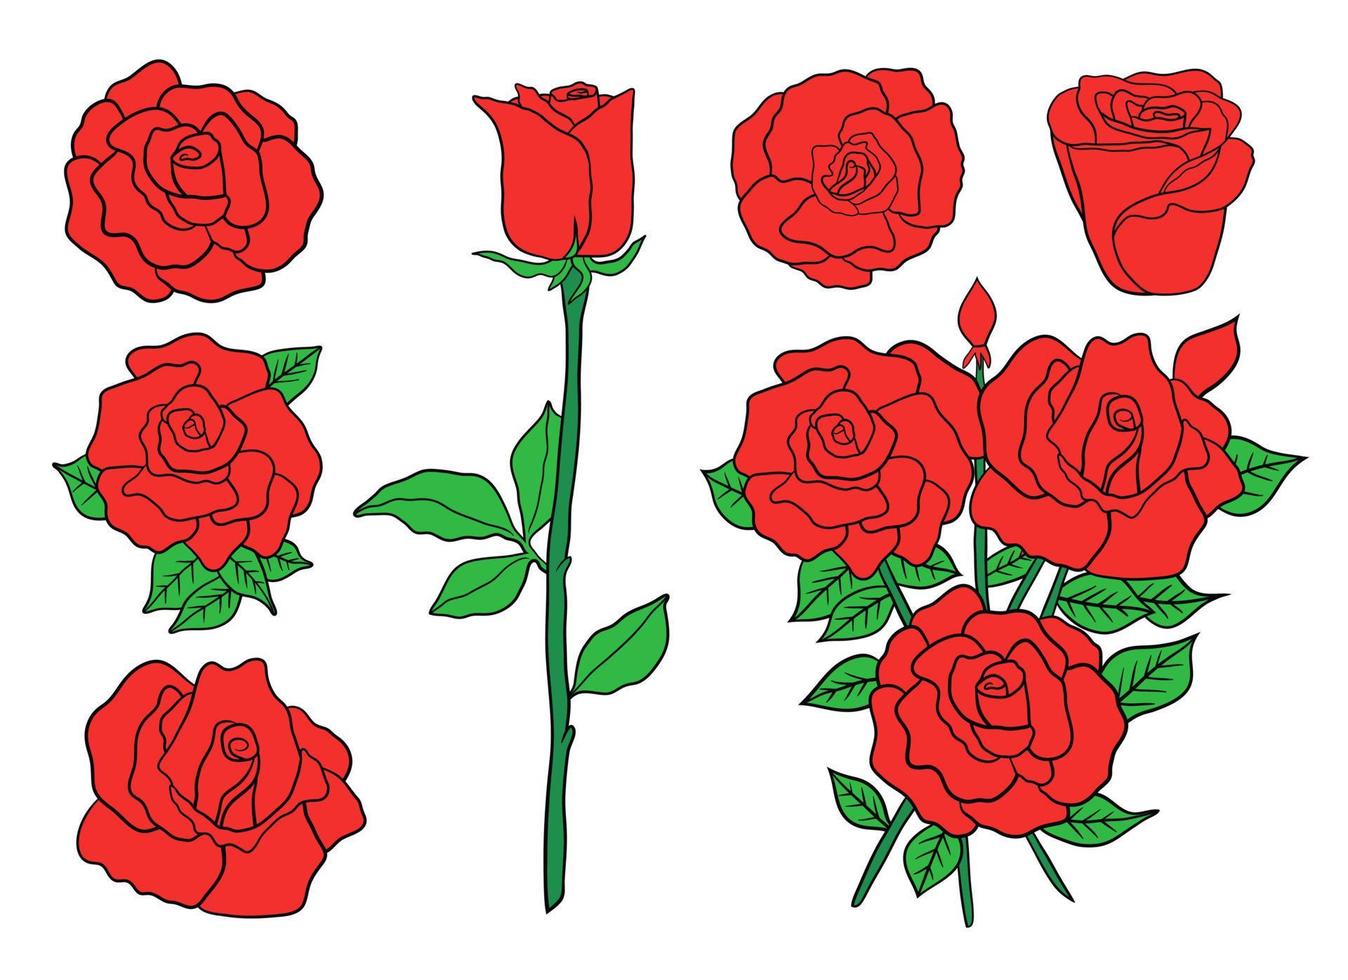 Roses vector design illustration isolated on white background